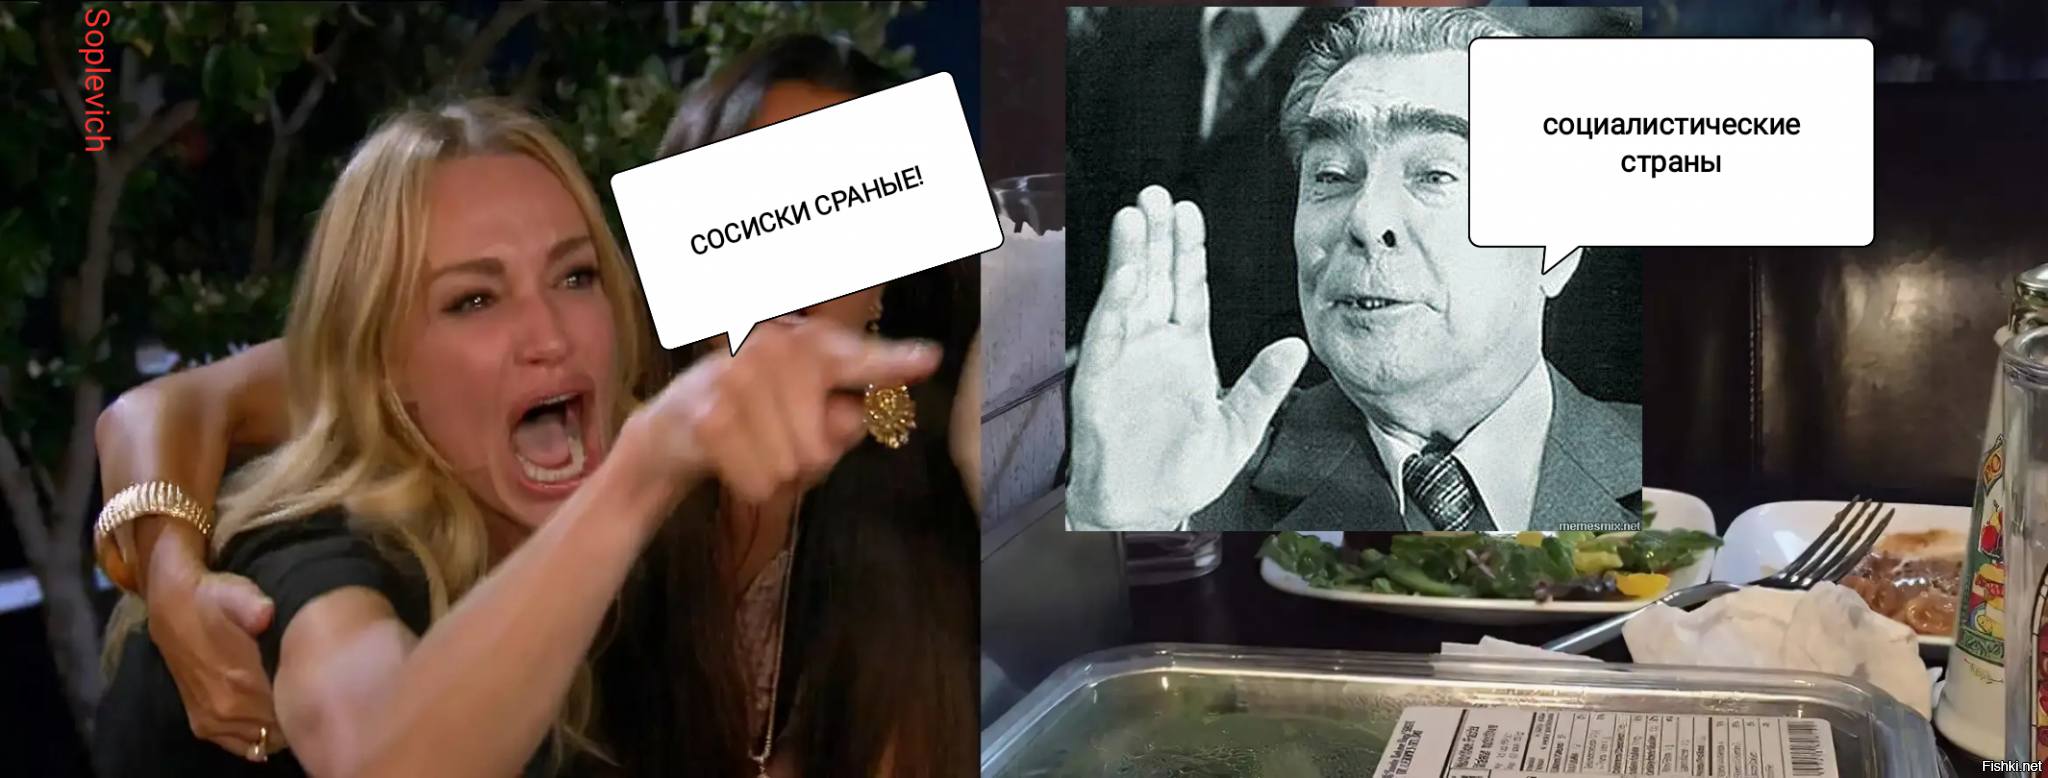 Мем про Брежнева